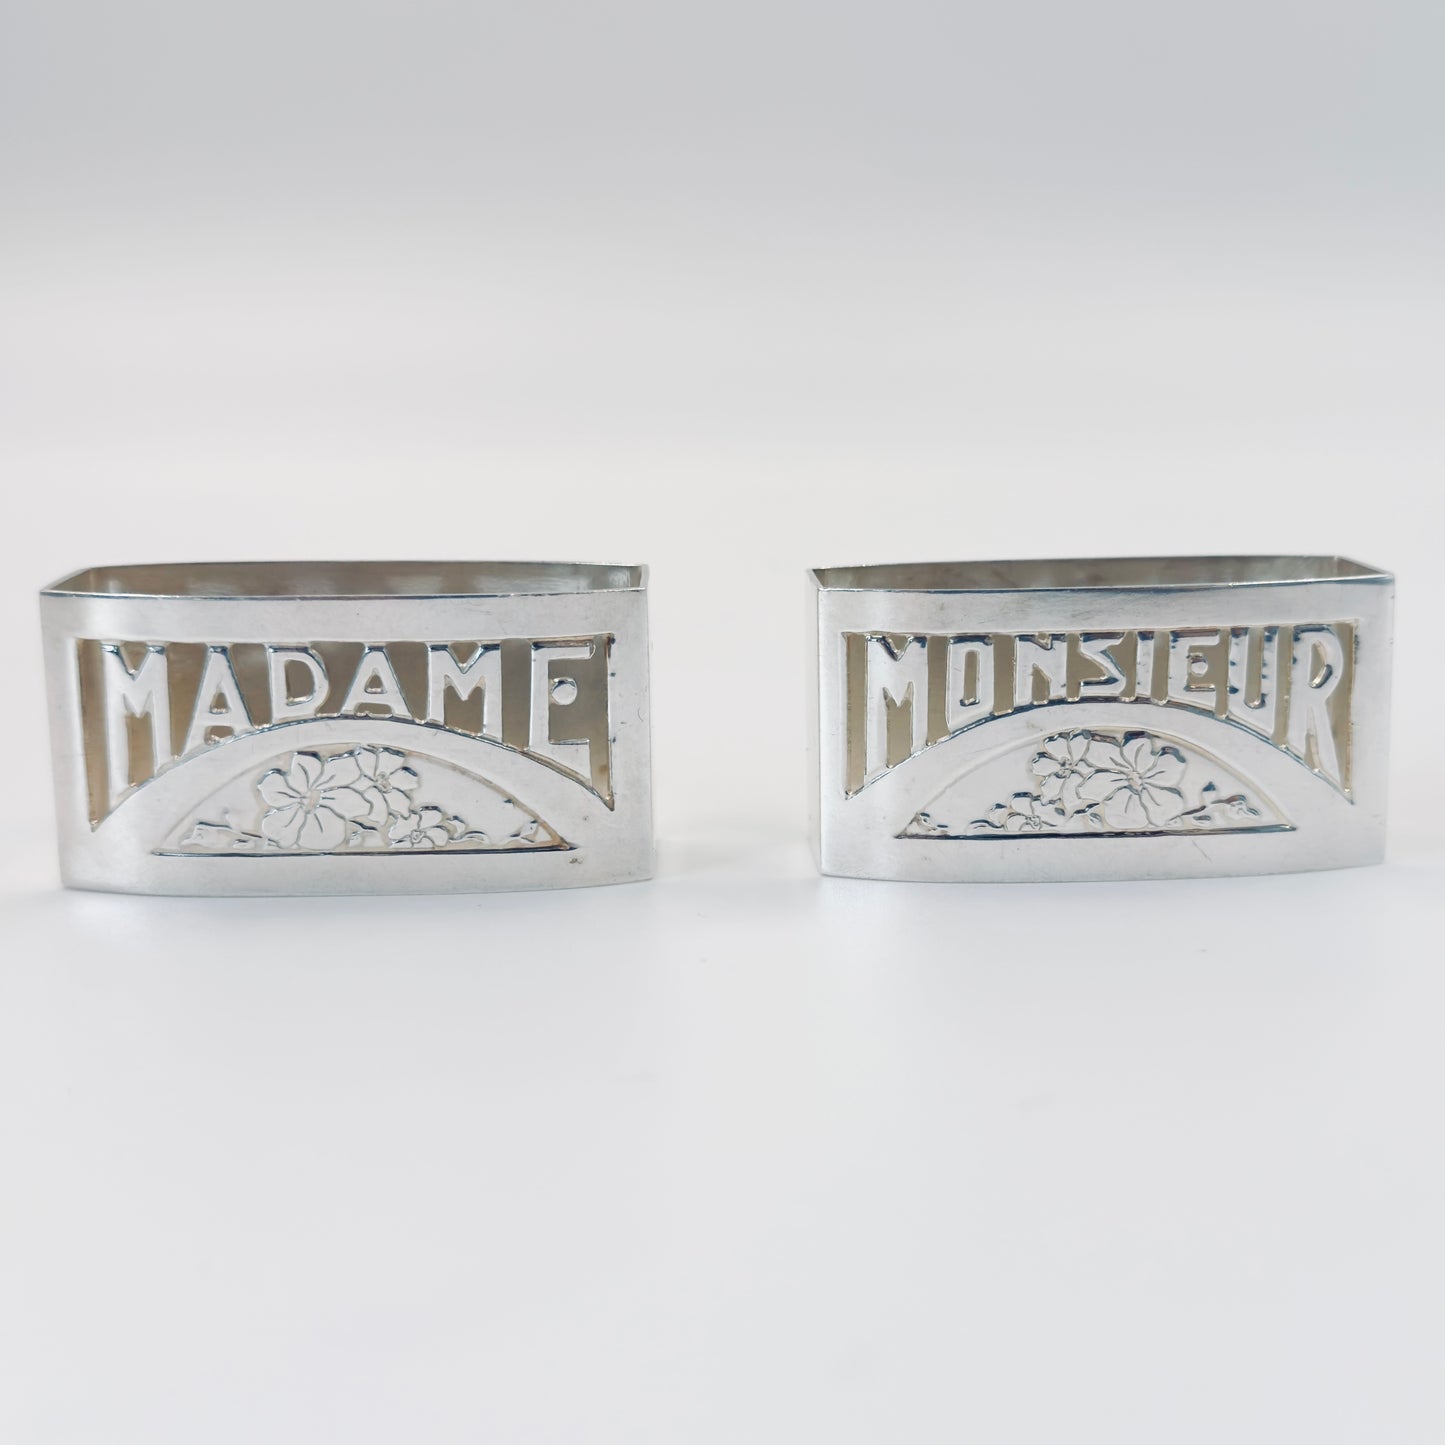 Rare Vintage Art Deco Pair of Napkin Rings - Monsieur & Madame